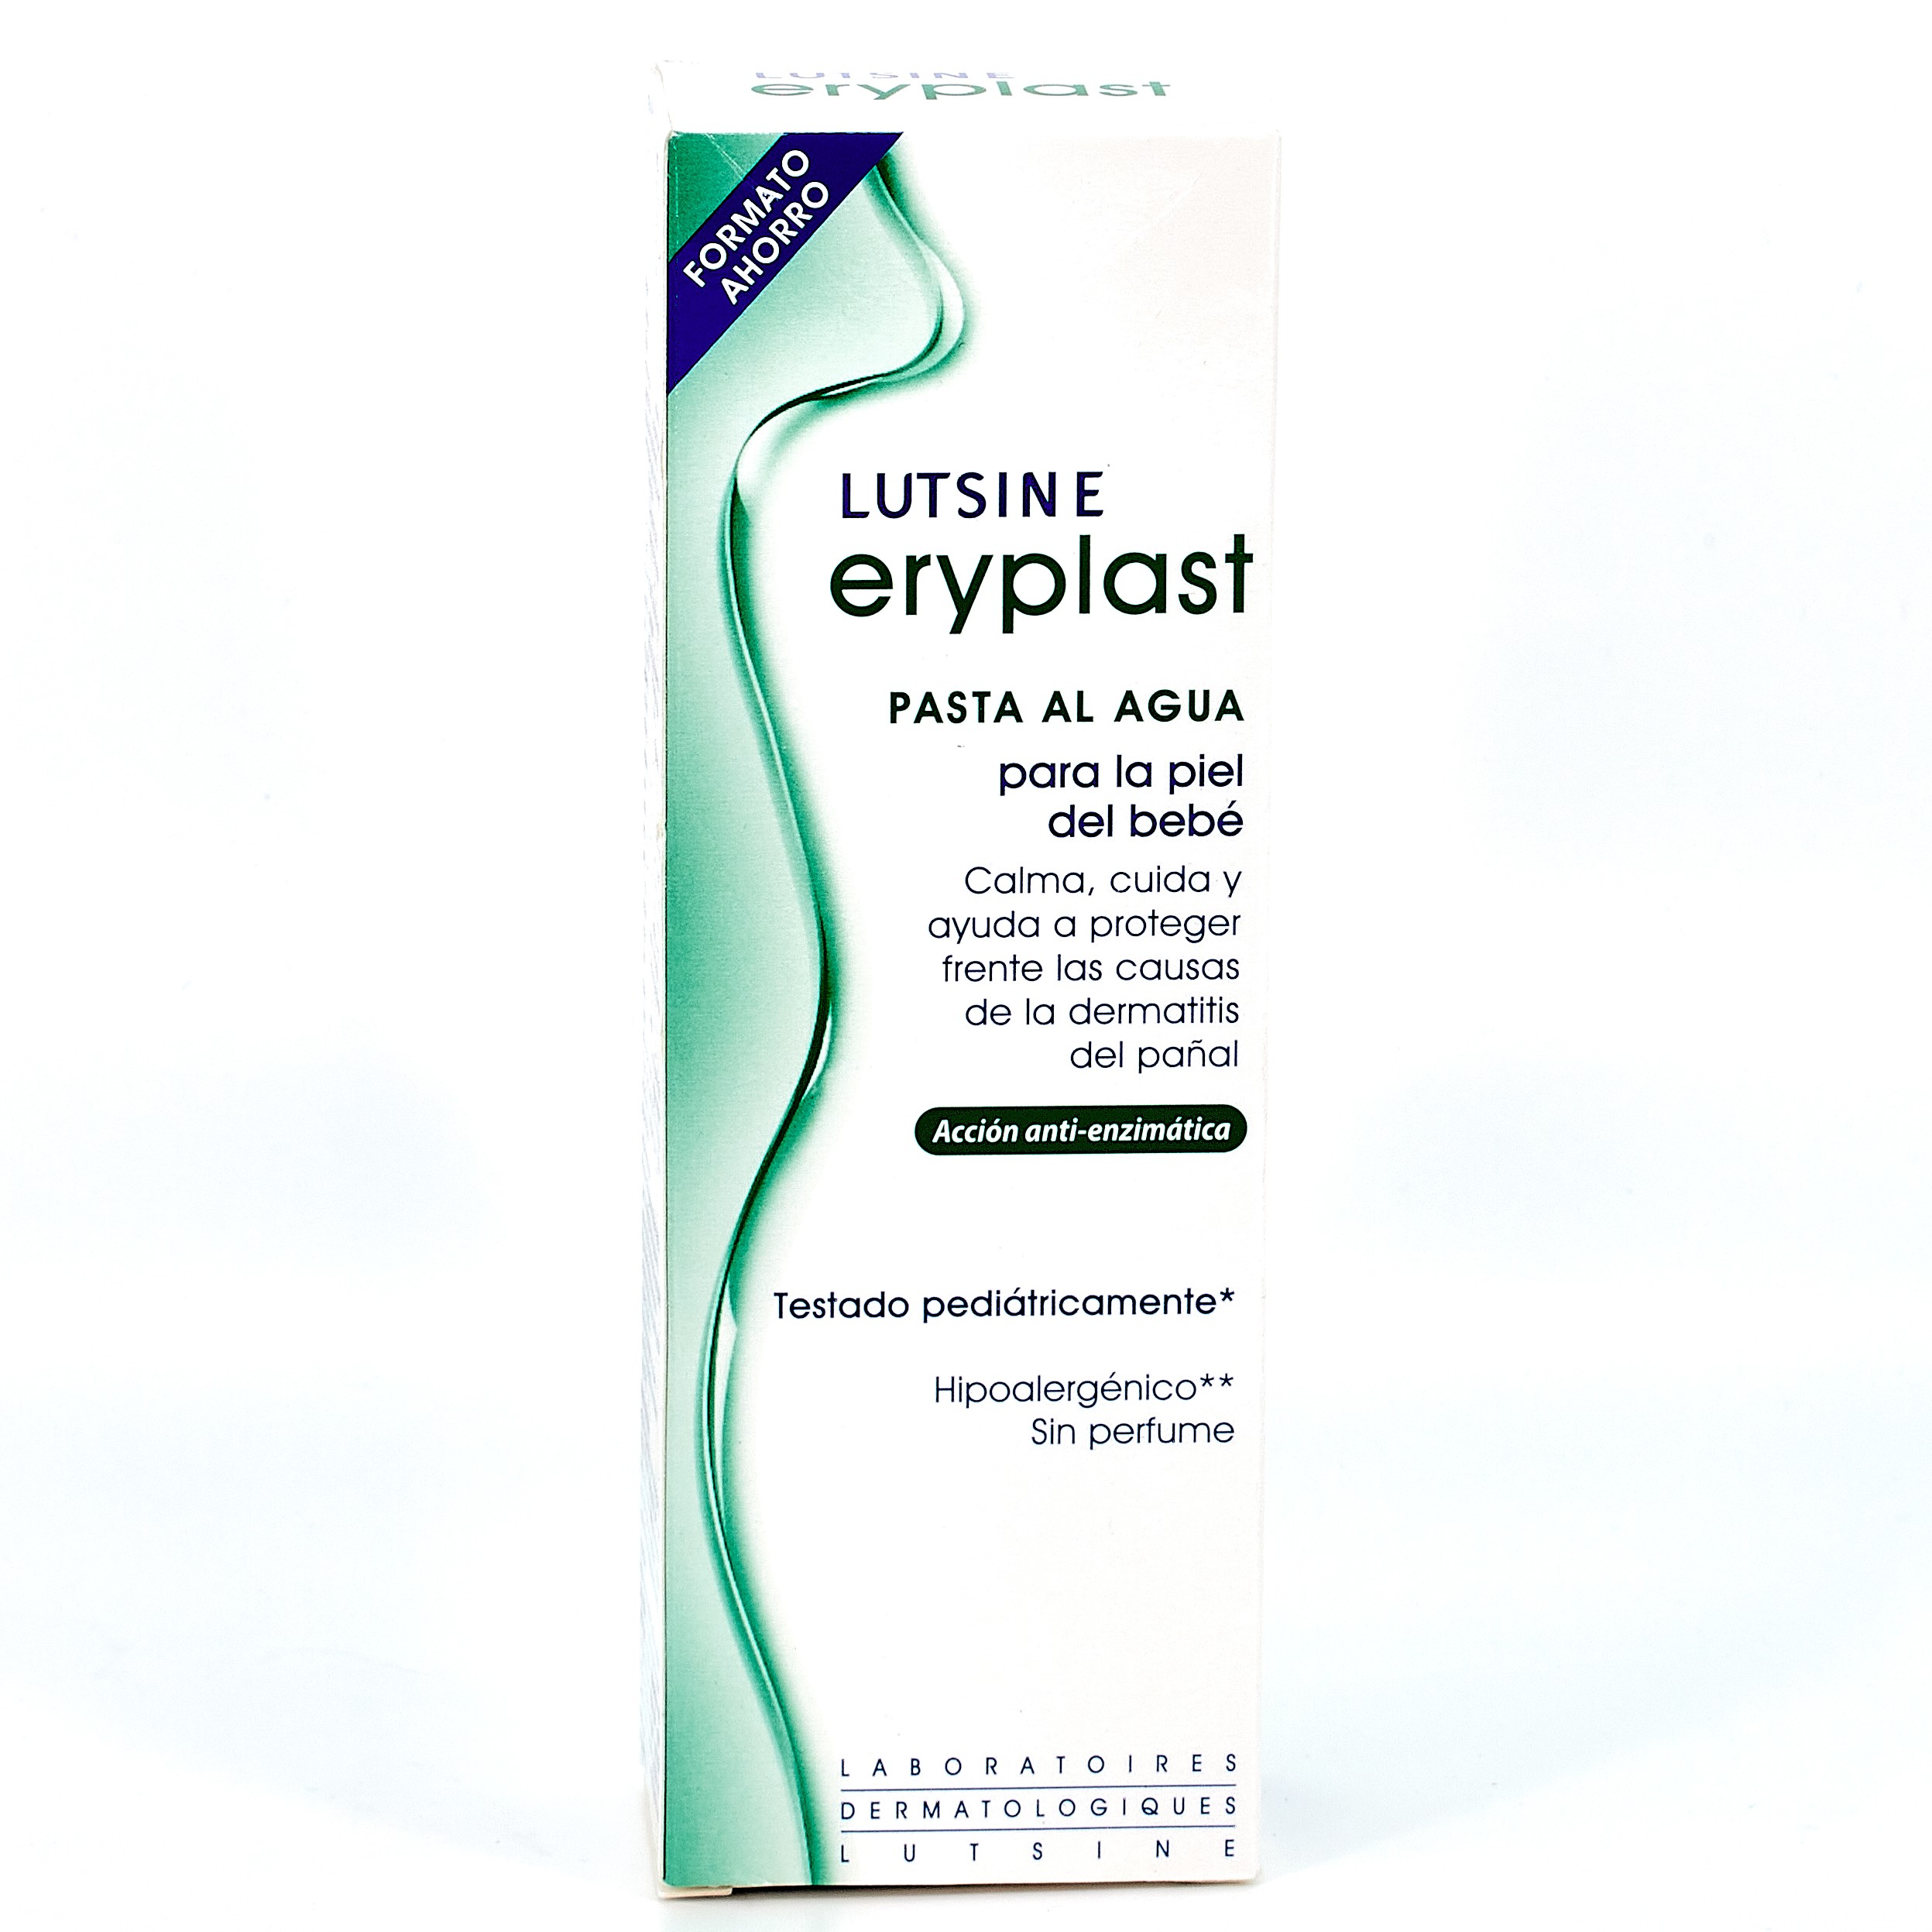 Comprar Lutsine Eryplast pasta al agua Formato ahorro 200g al mejor precio